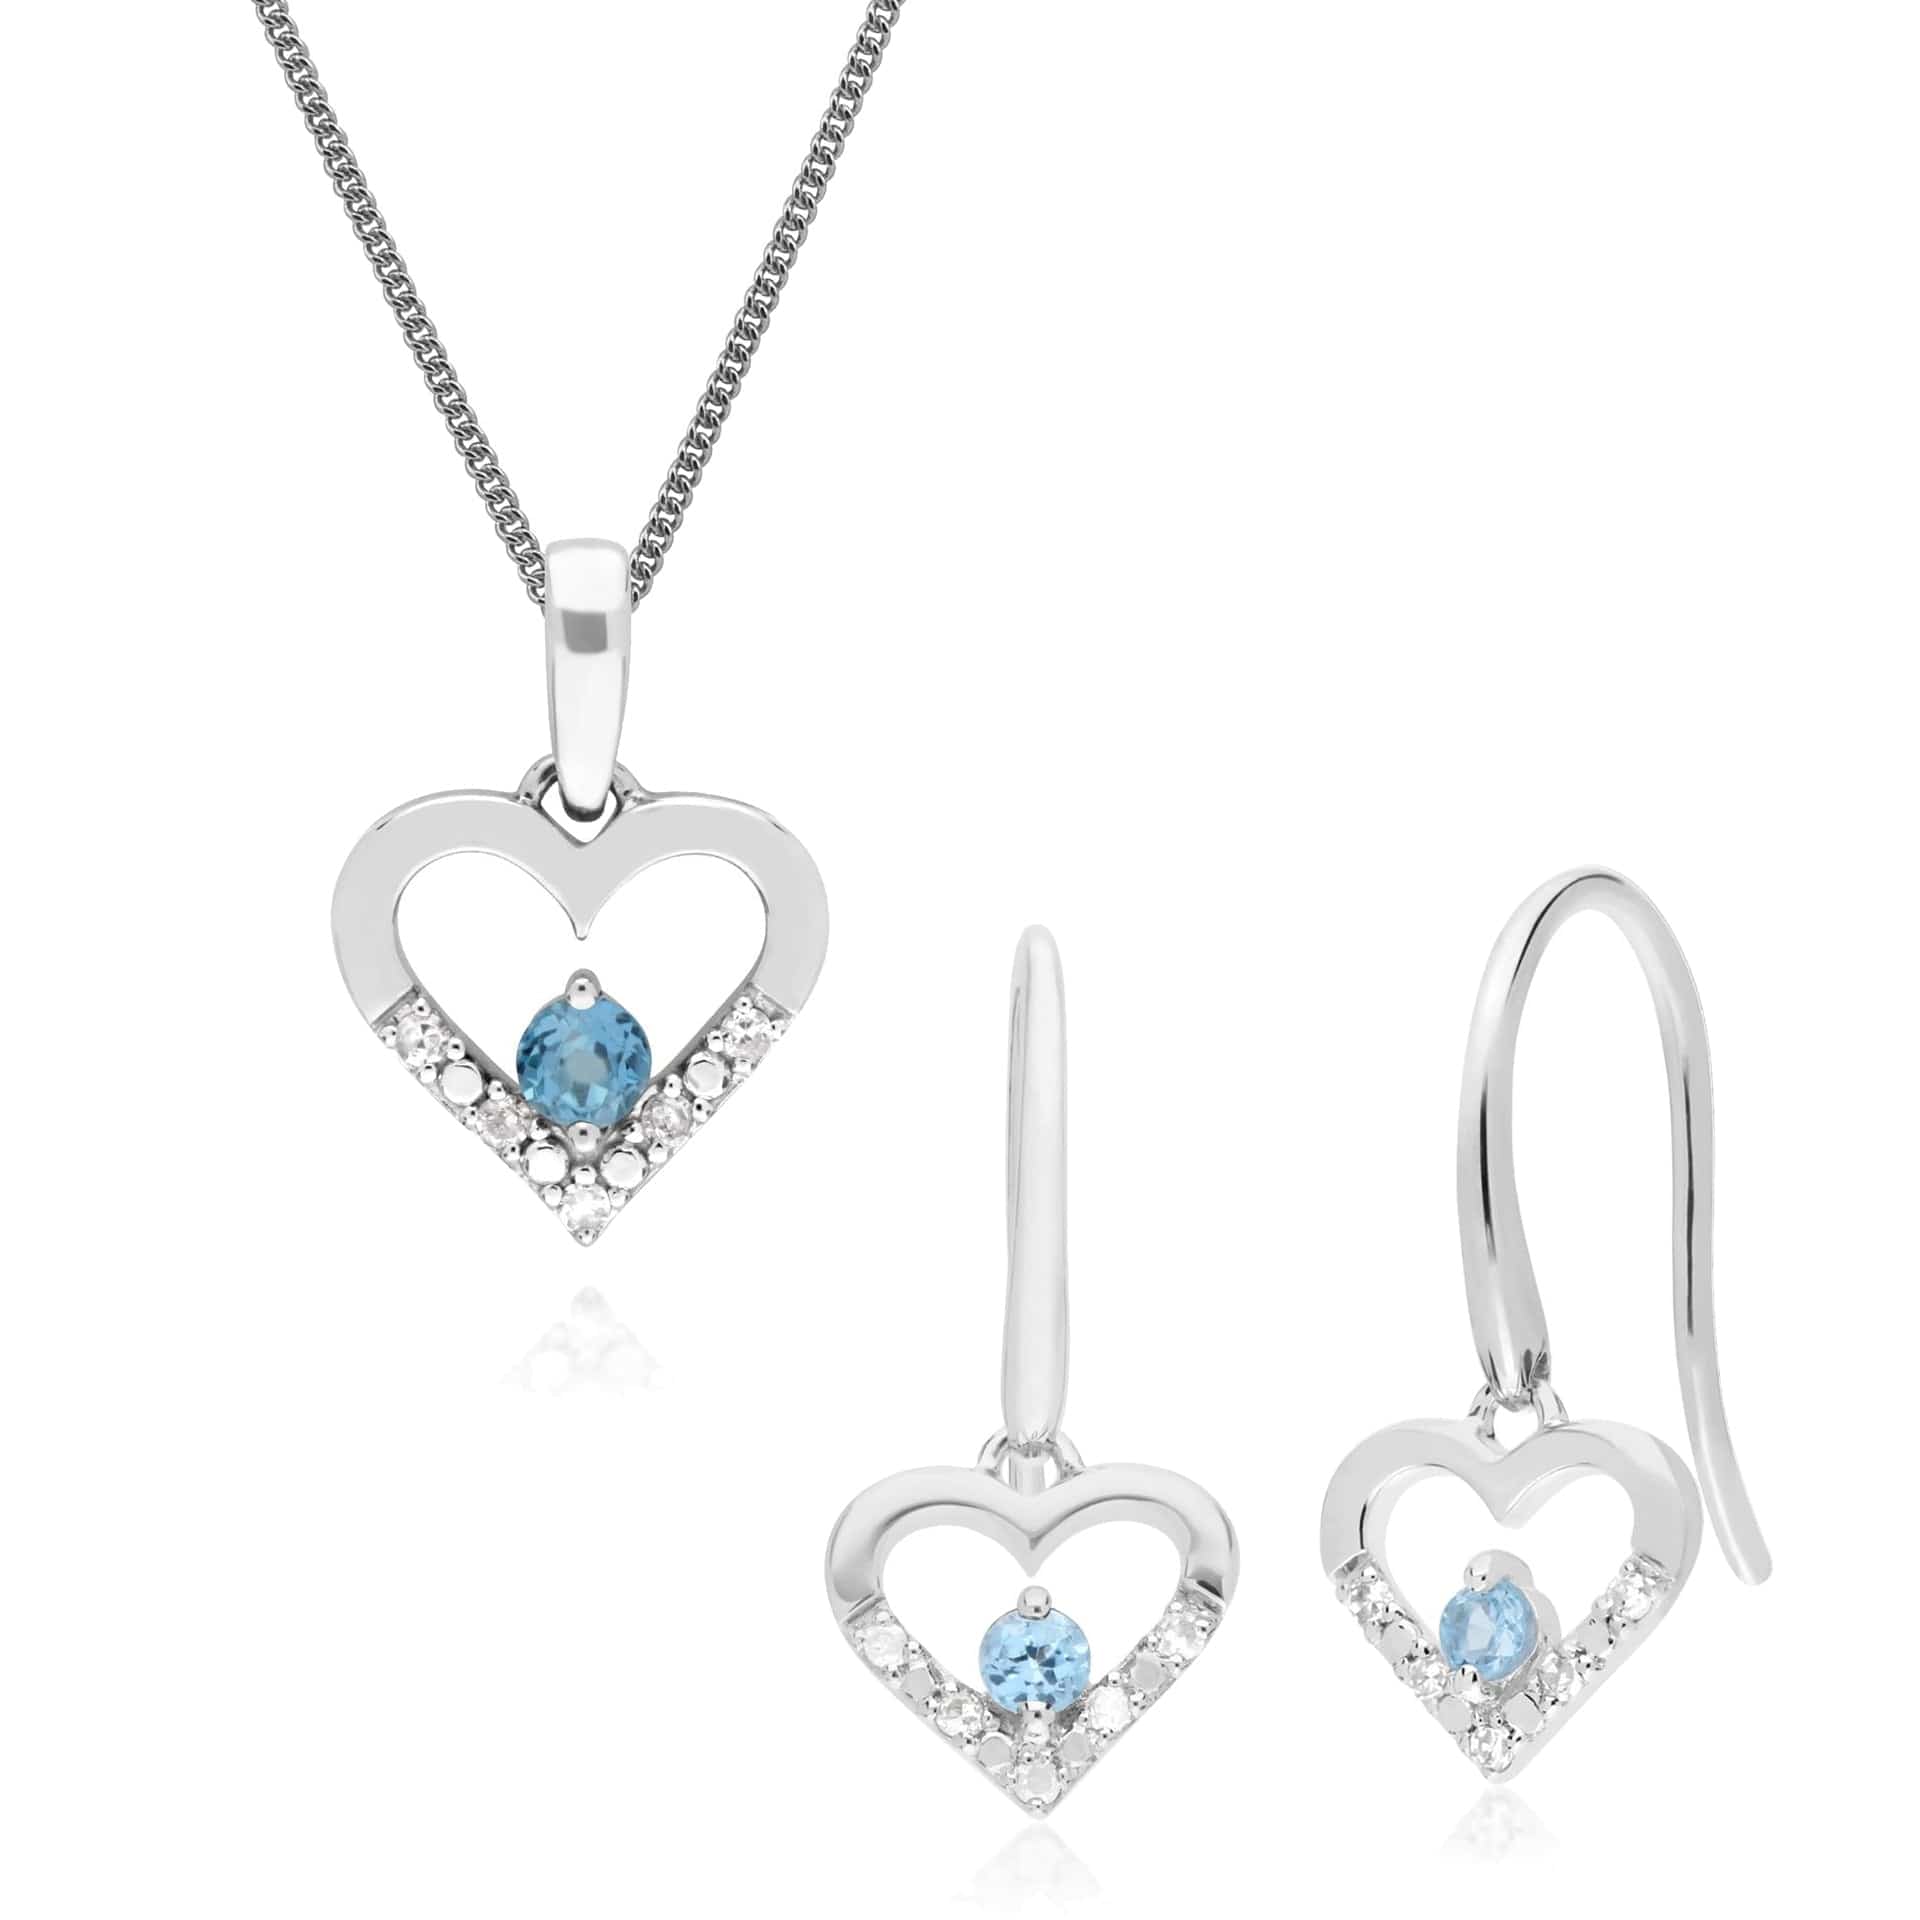 162E0258069-162P0219069 Classic Round Blue Topaz & Diamond Heart Drop Earrings & Pendant Set in 9ct White Gold 1